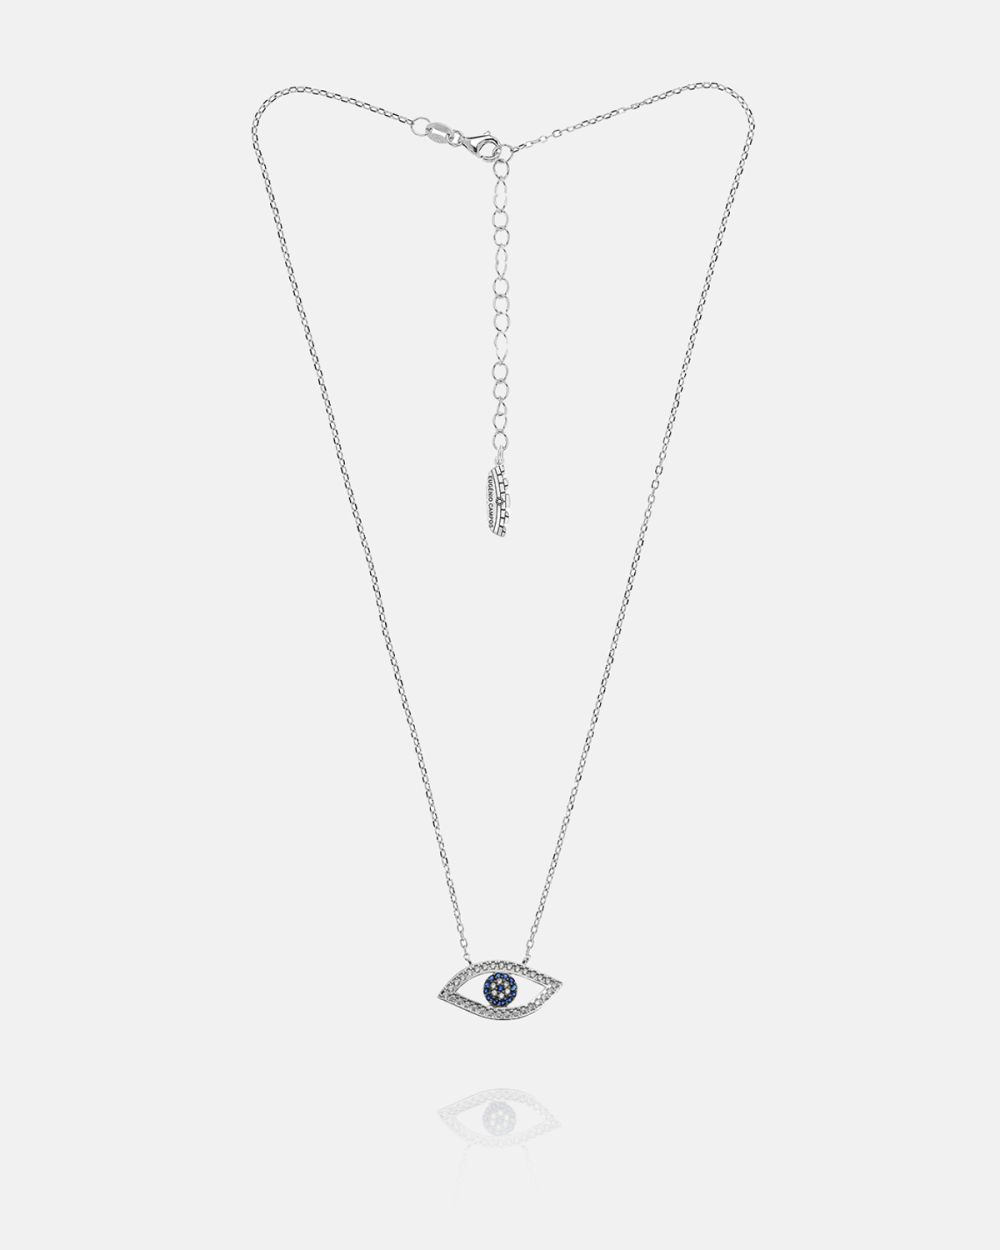 Blue Mystic Eye Necklace in Silver